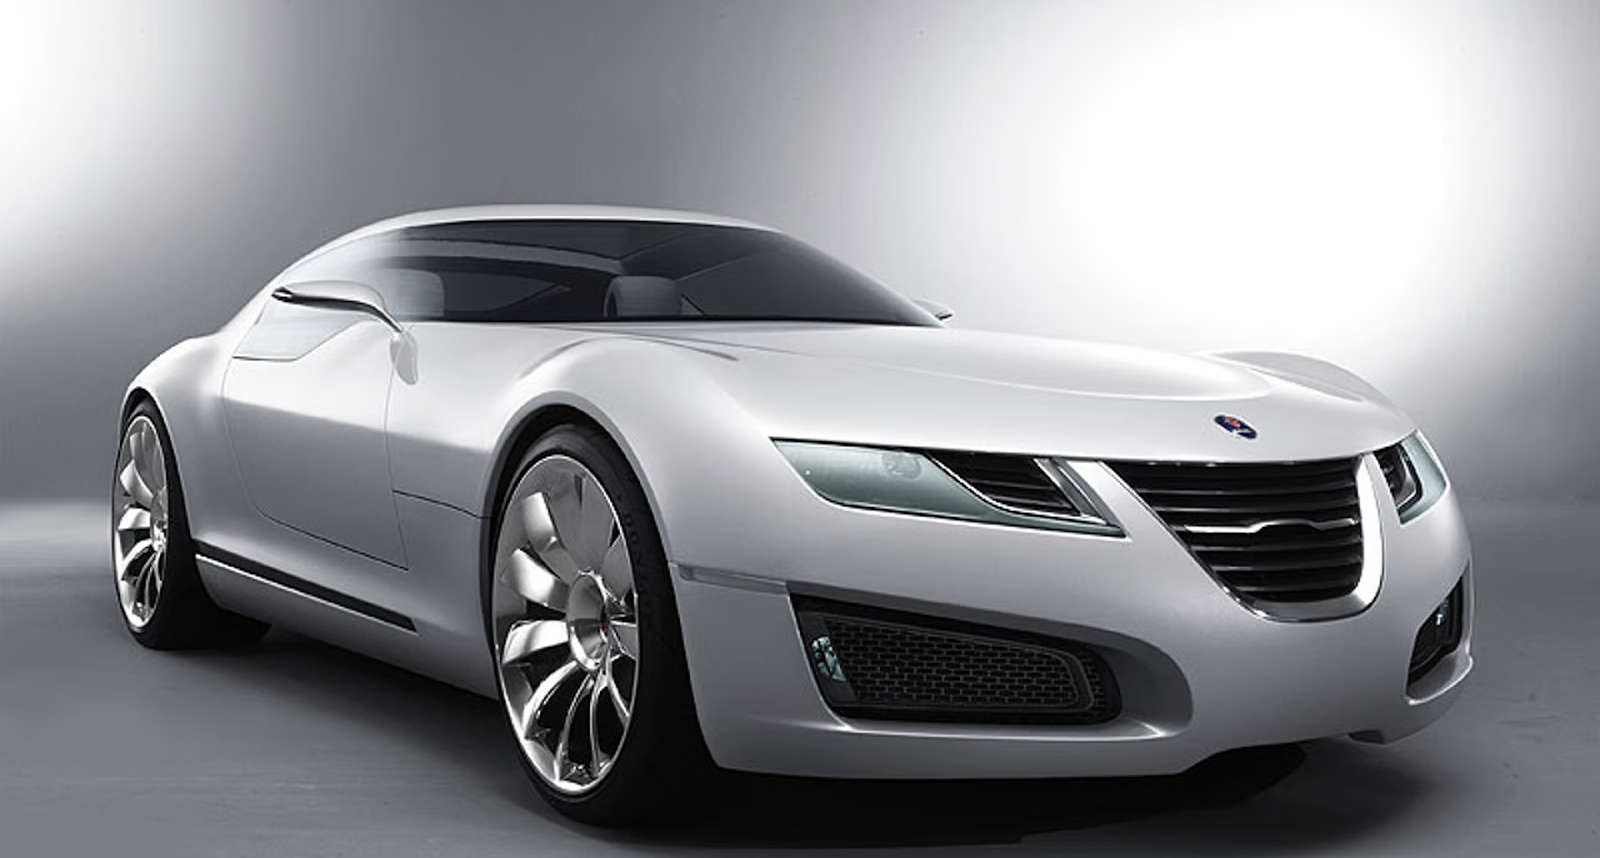 Saab AeroX Concept Car front